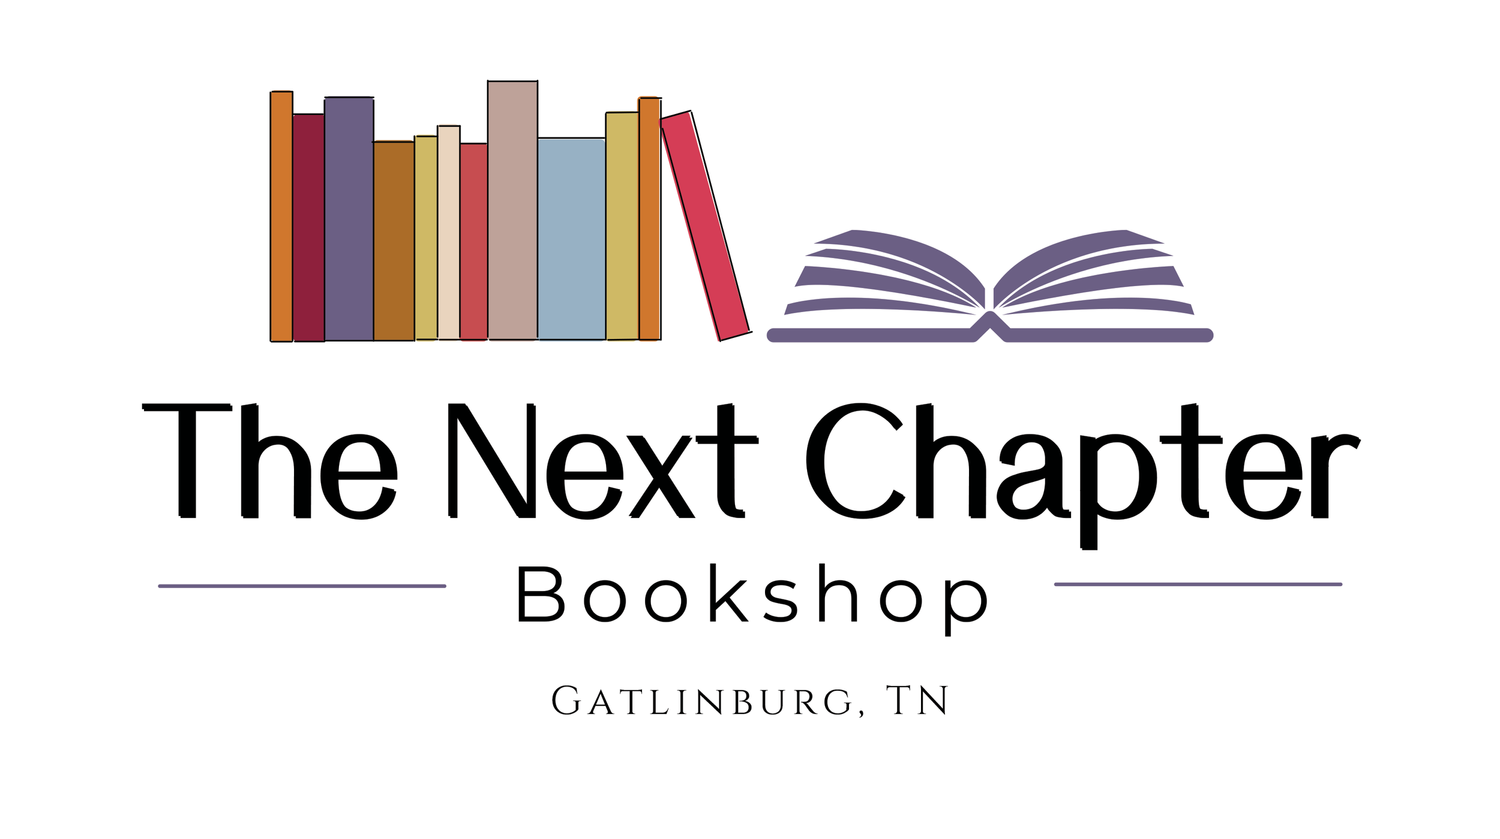 The Next Chapter Bookshop